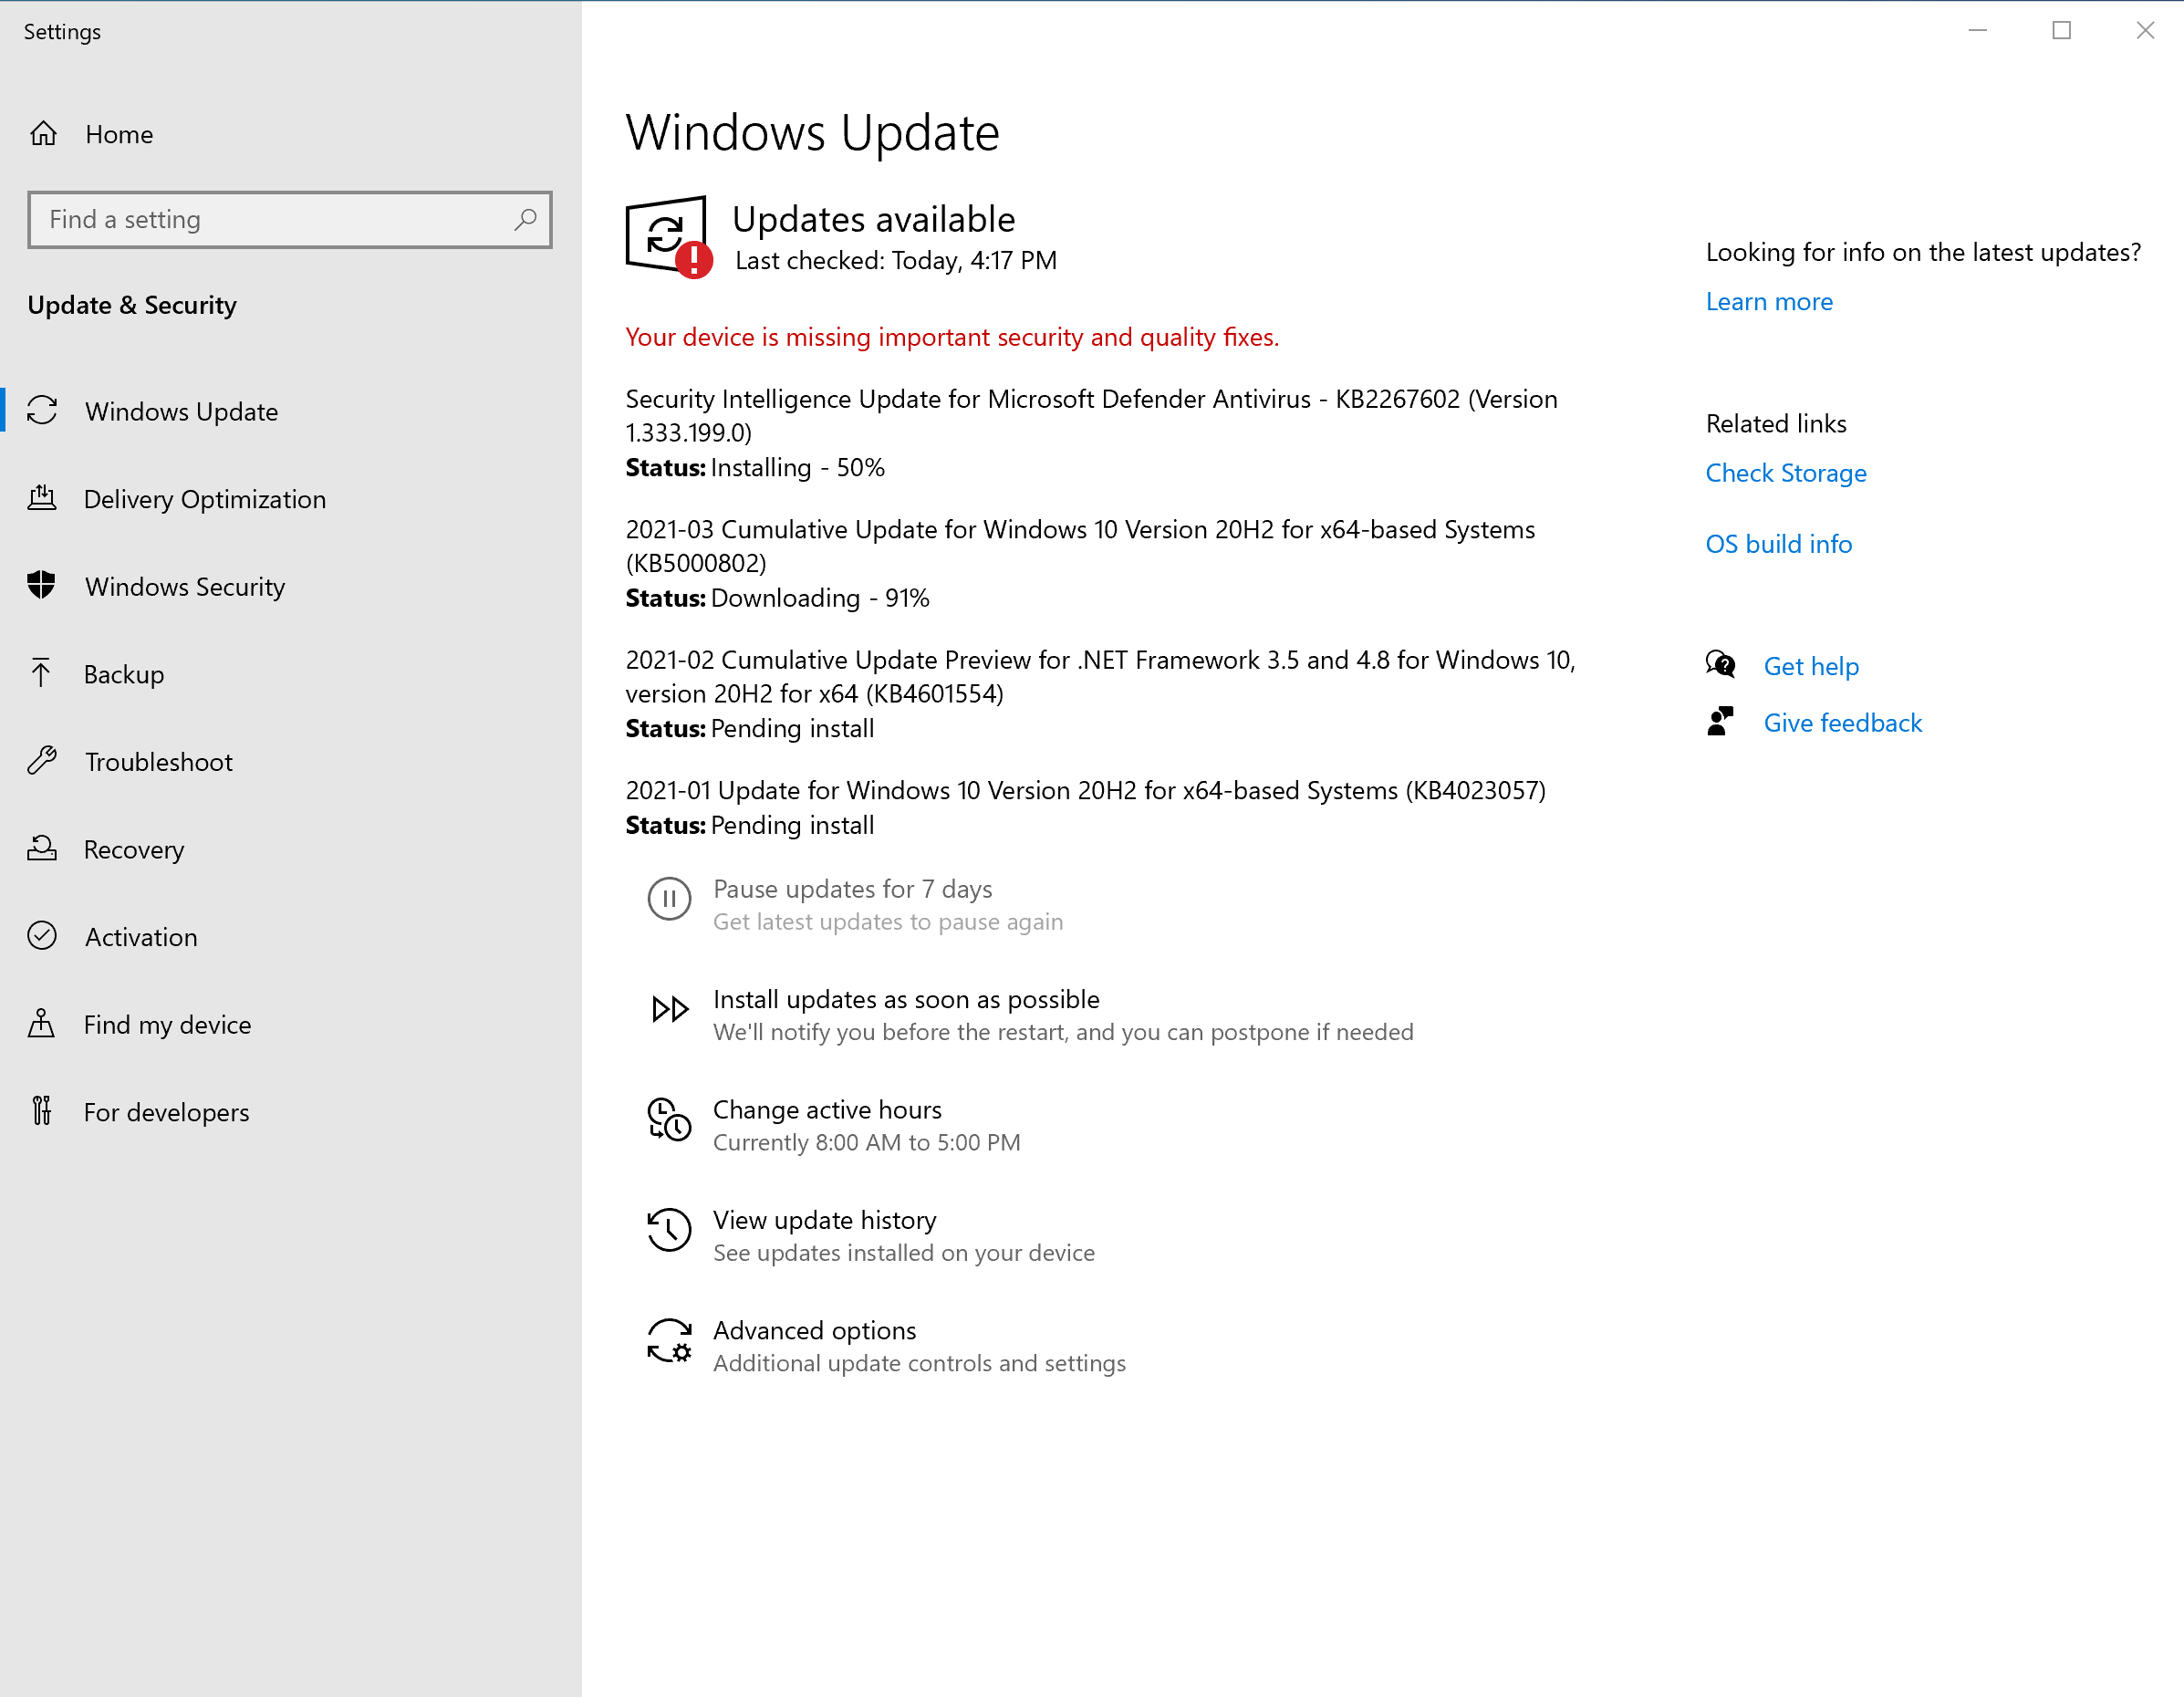 Windows Update download status in Settings